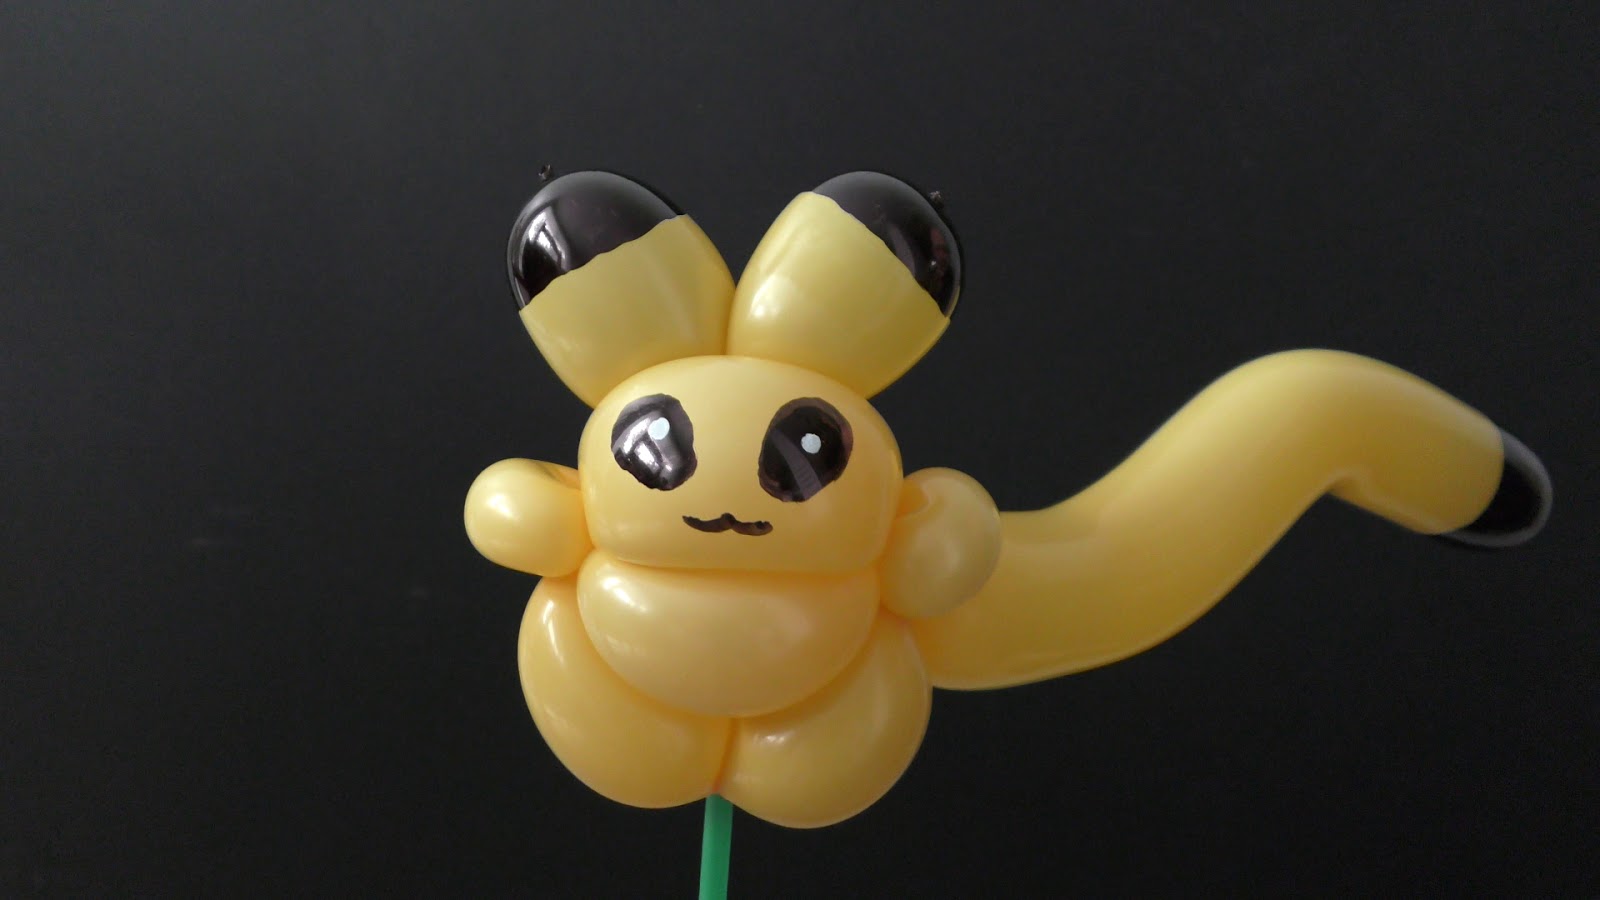 CLASSICAL: Balloon Pokemon Pikachu